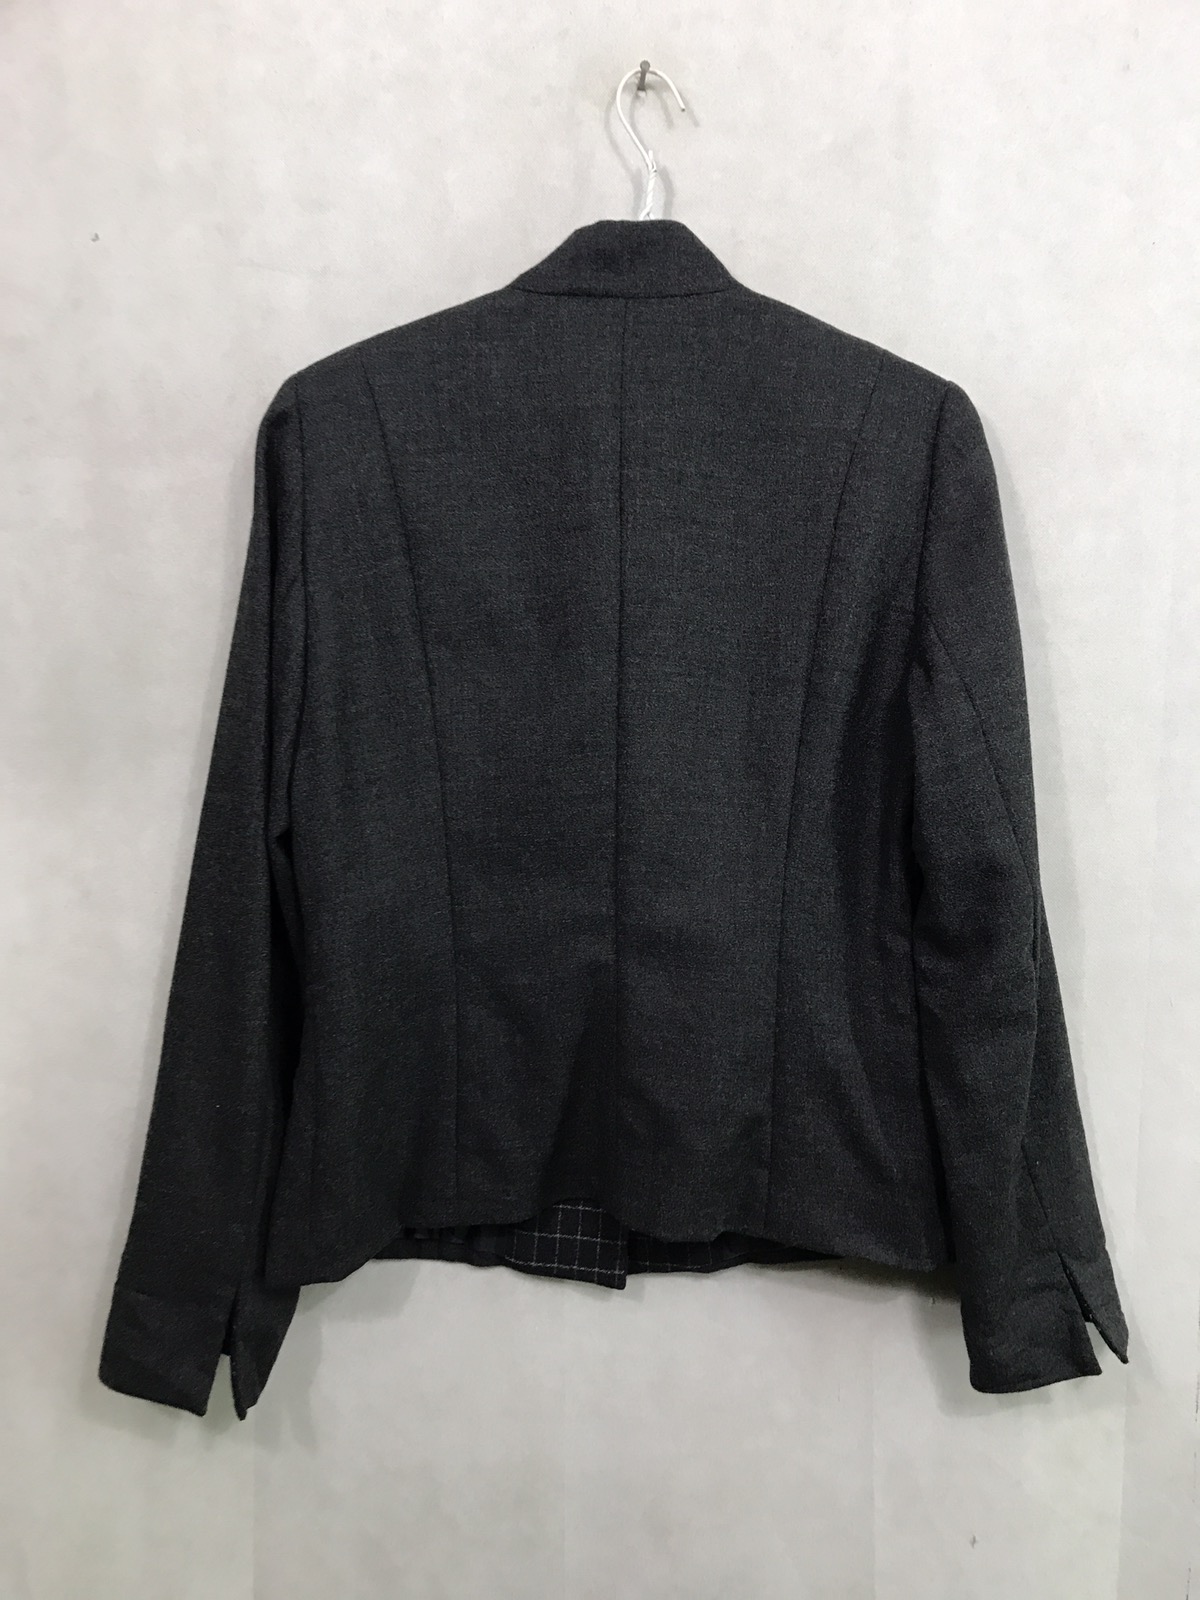 Carven wool jacket - 6